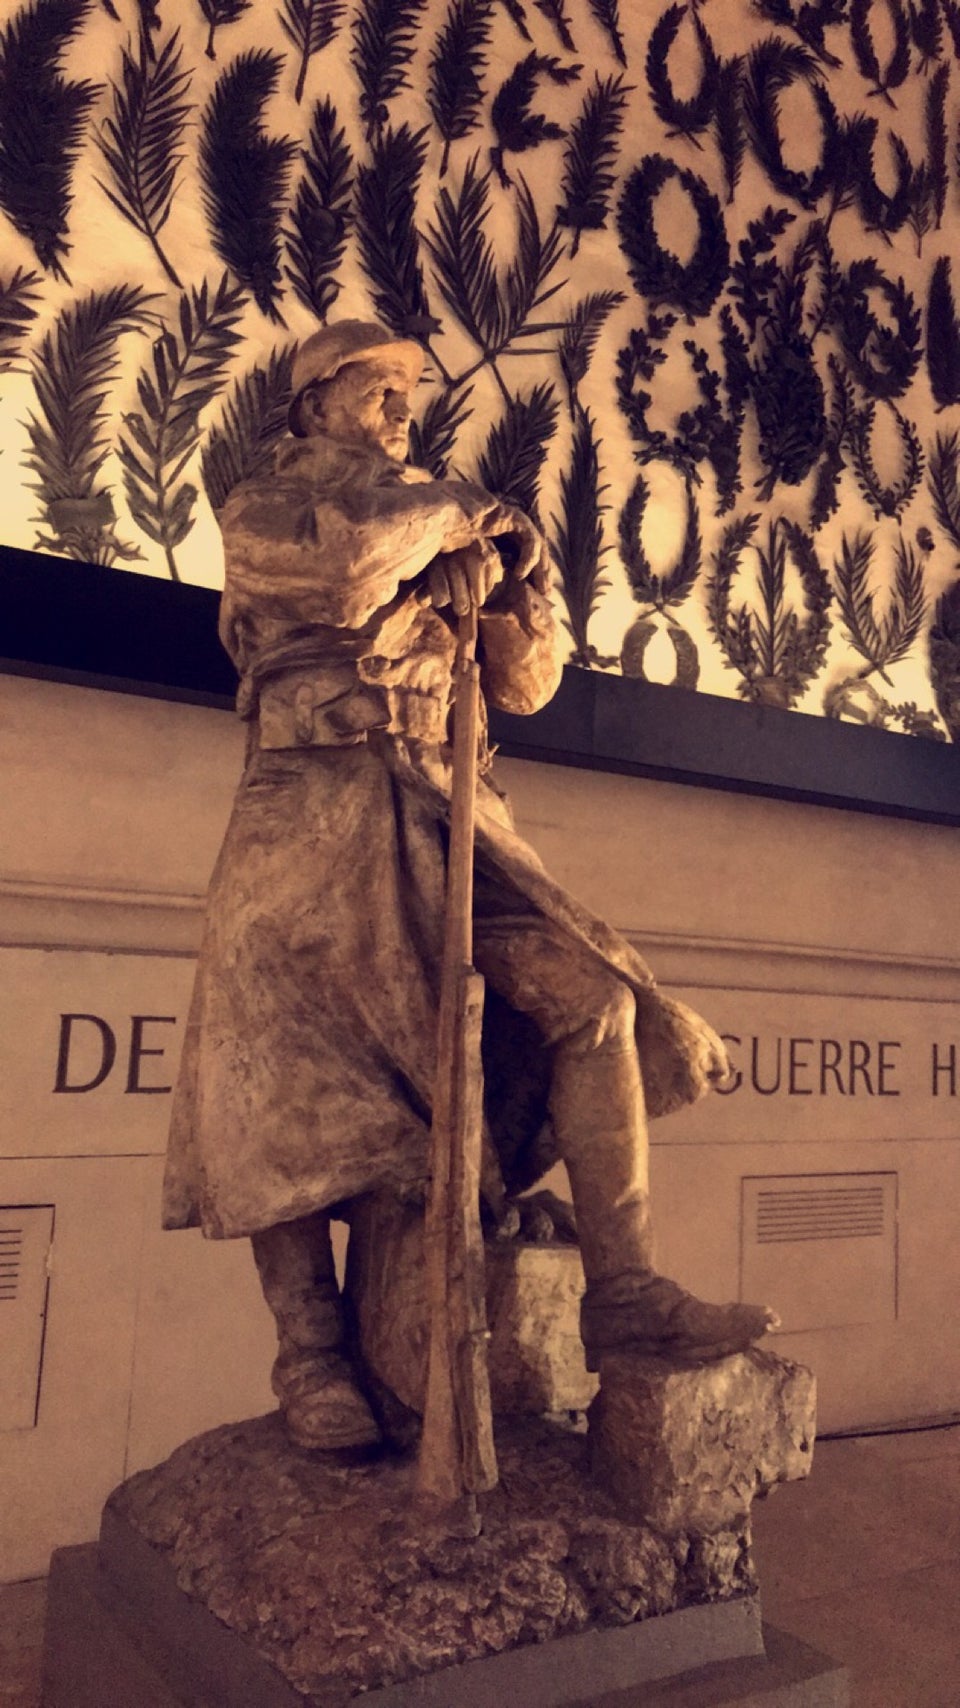 Photo of Arc de Triomphe